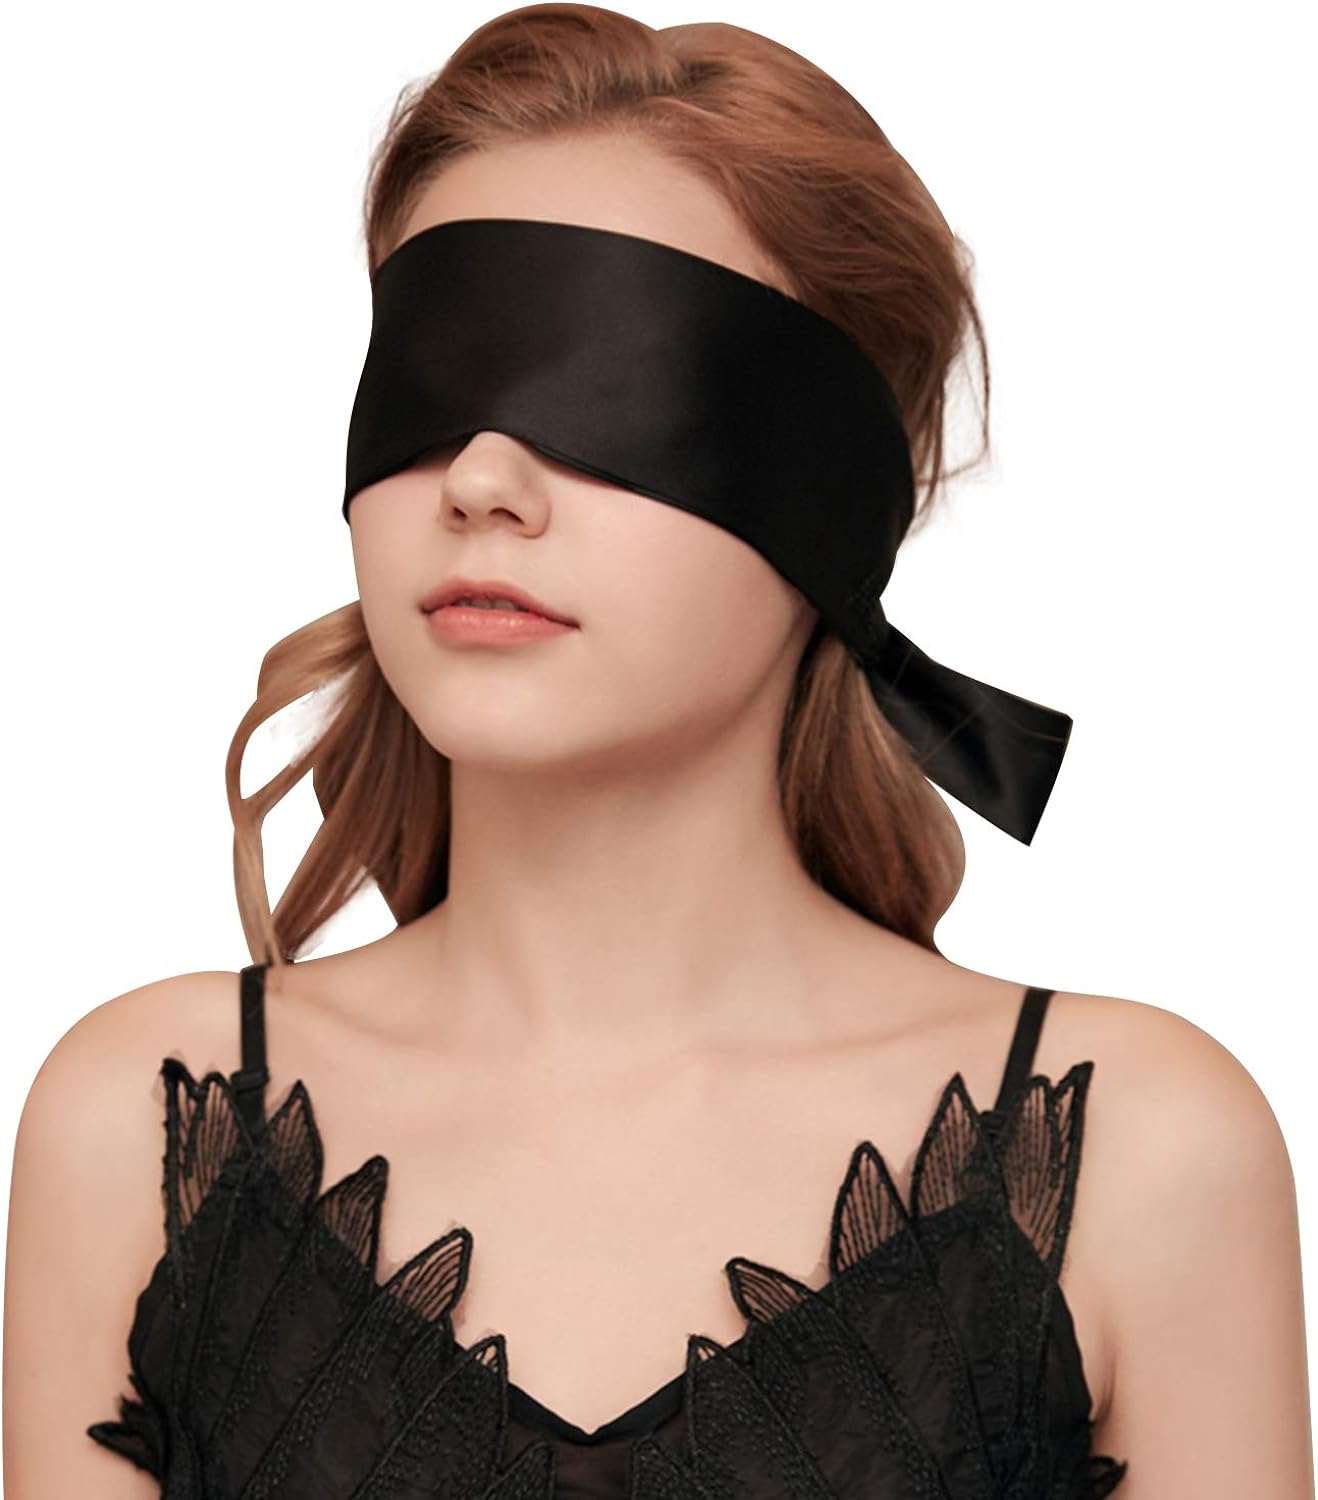 YOMORIO Satin Bandage Blindfold Eye Mask Sexy Playsuit Lingerie Accessories